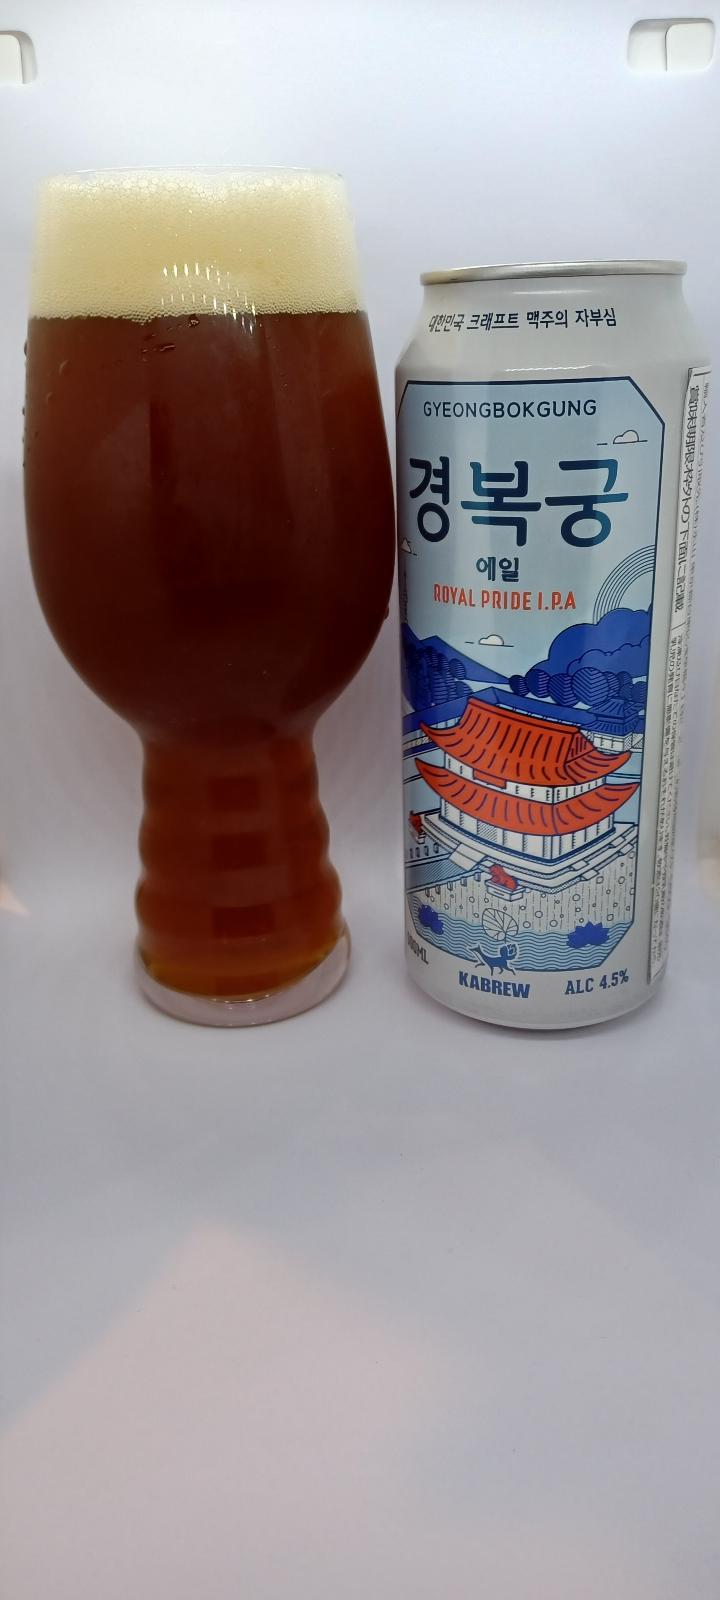 Gyeongbokgung IPA